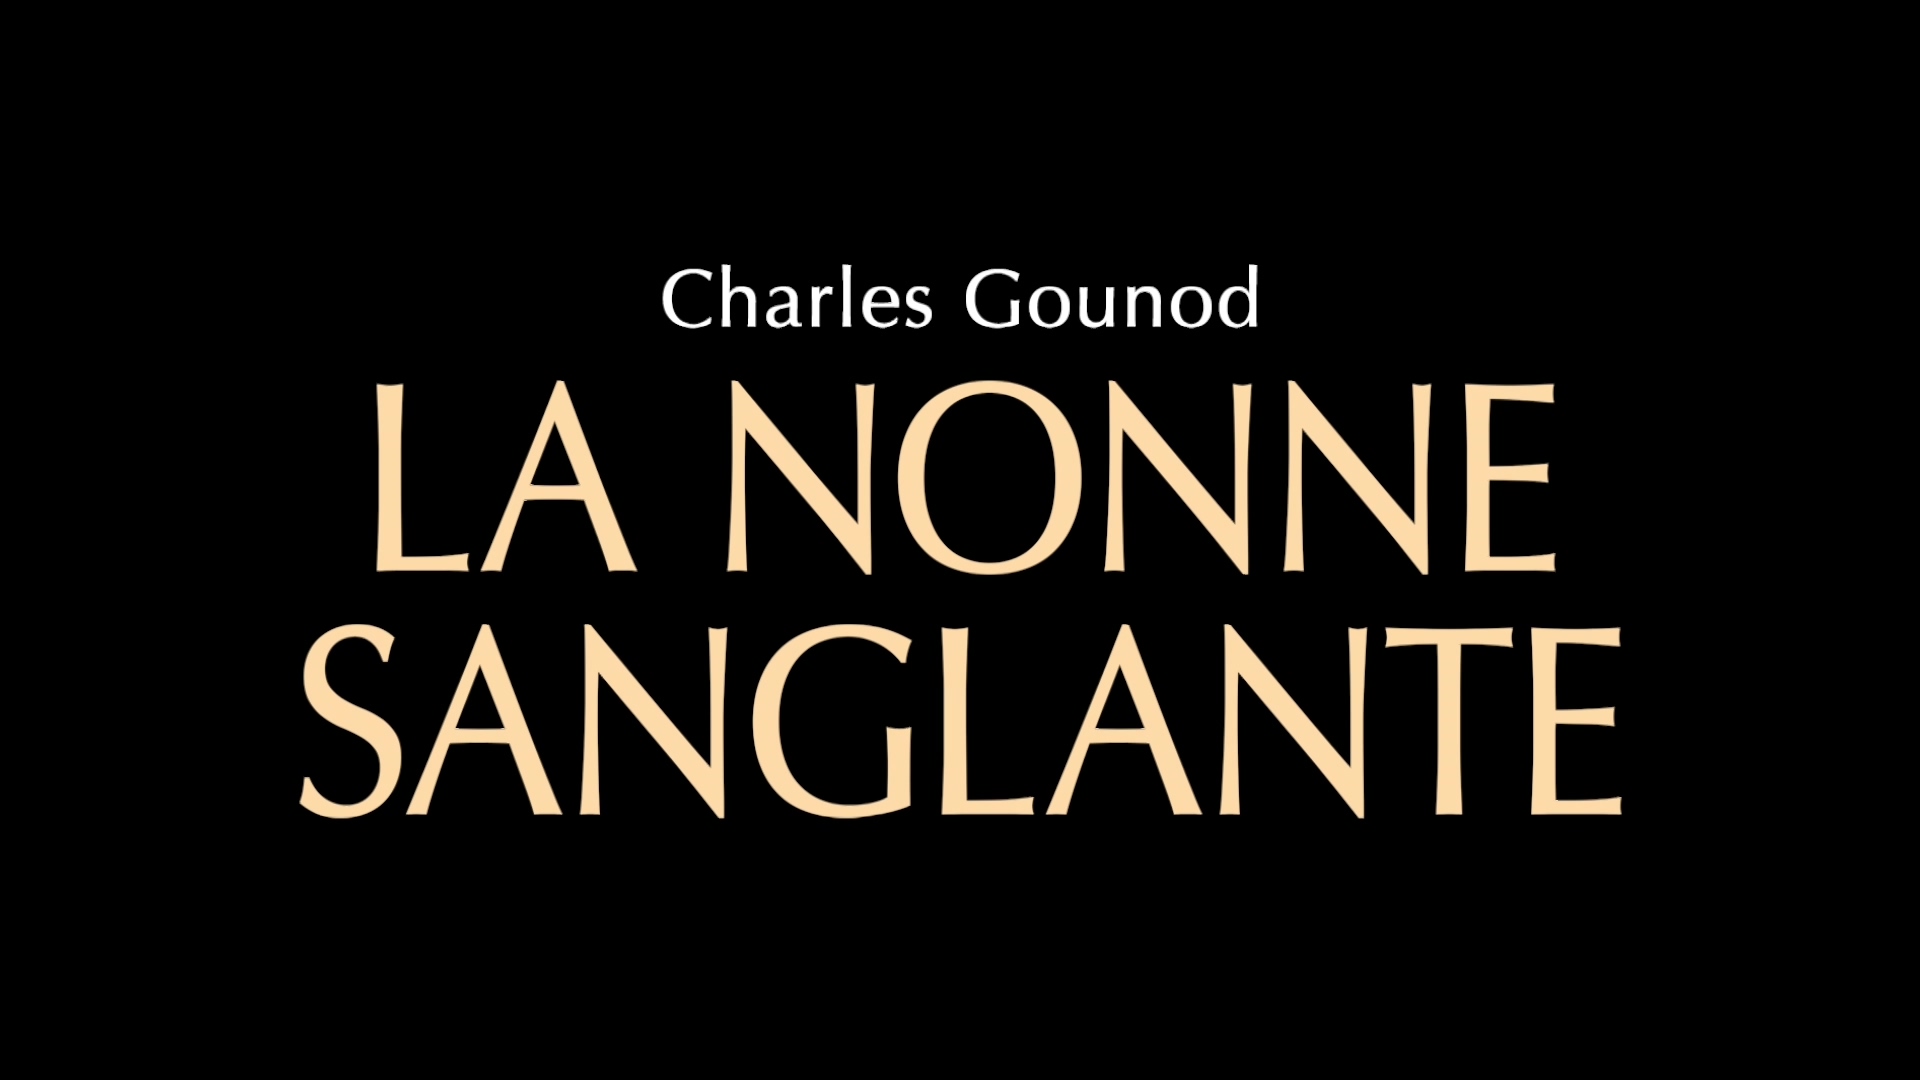 Gounod La Nonne sanglante - Opera Comique (2018) [Blu-ray]_20190820_194458.591.jpg